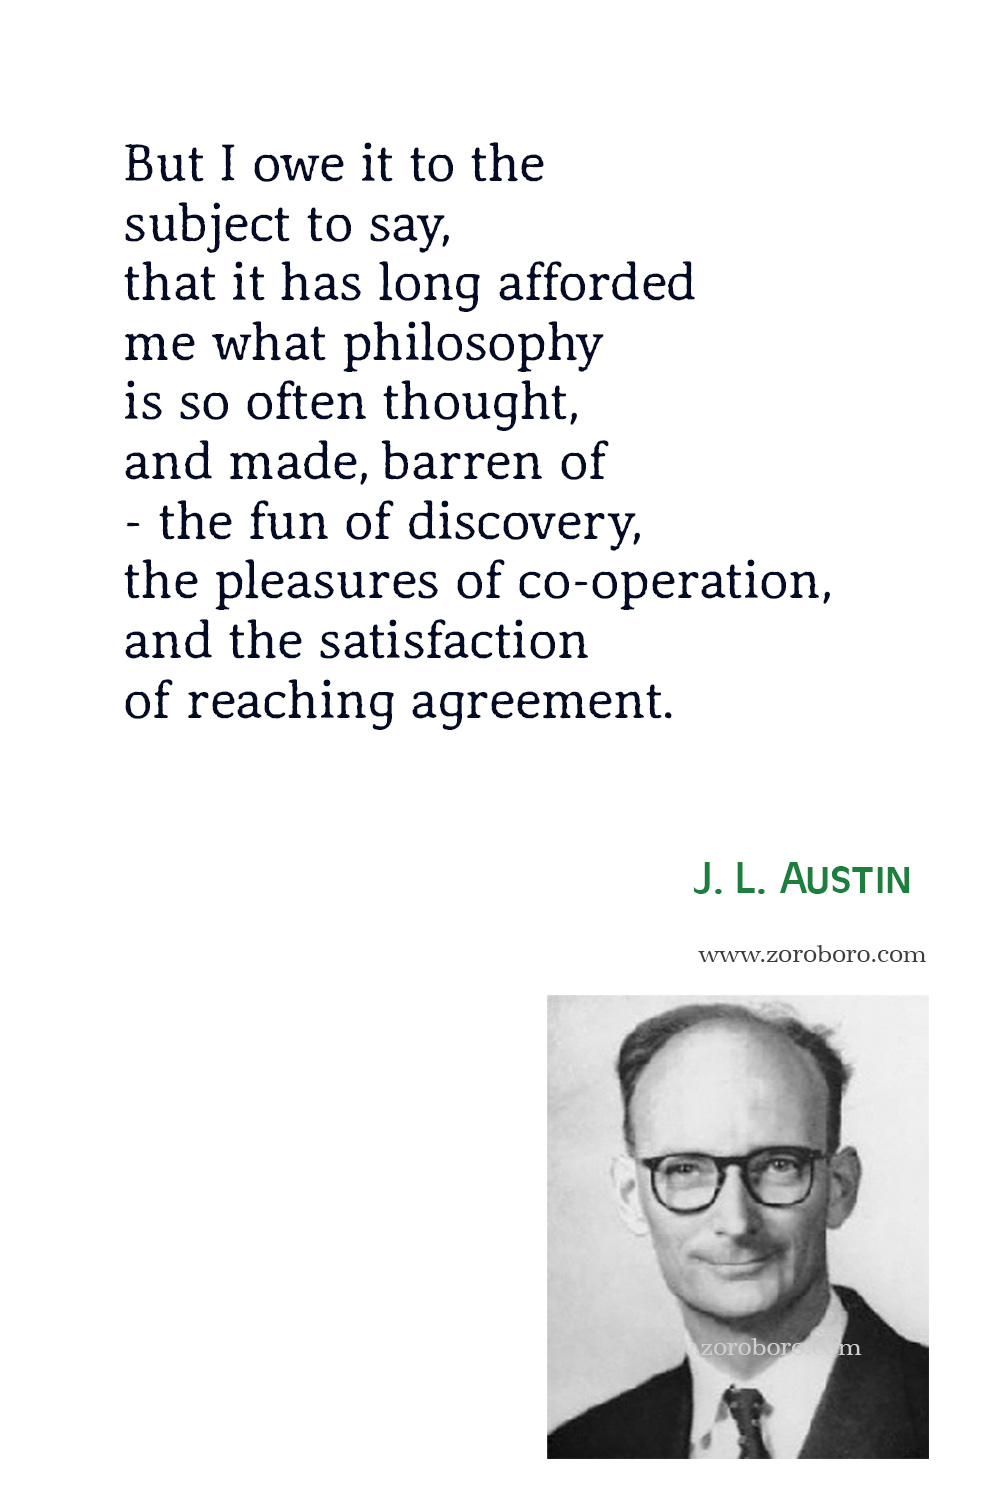 J.L. Austin Quotes, J.L. Austin Speech Act Theory, J.L. Austin how to do things with words, J.L. Austin Books Quotes, J.L. Austin